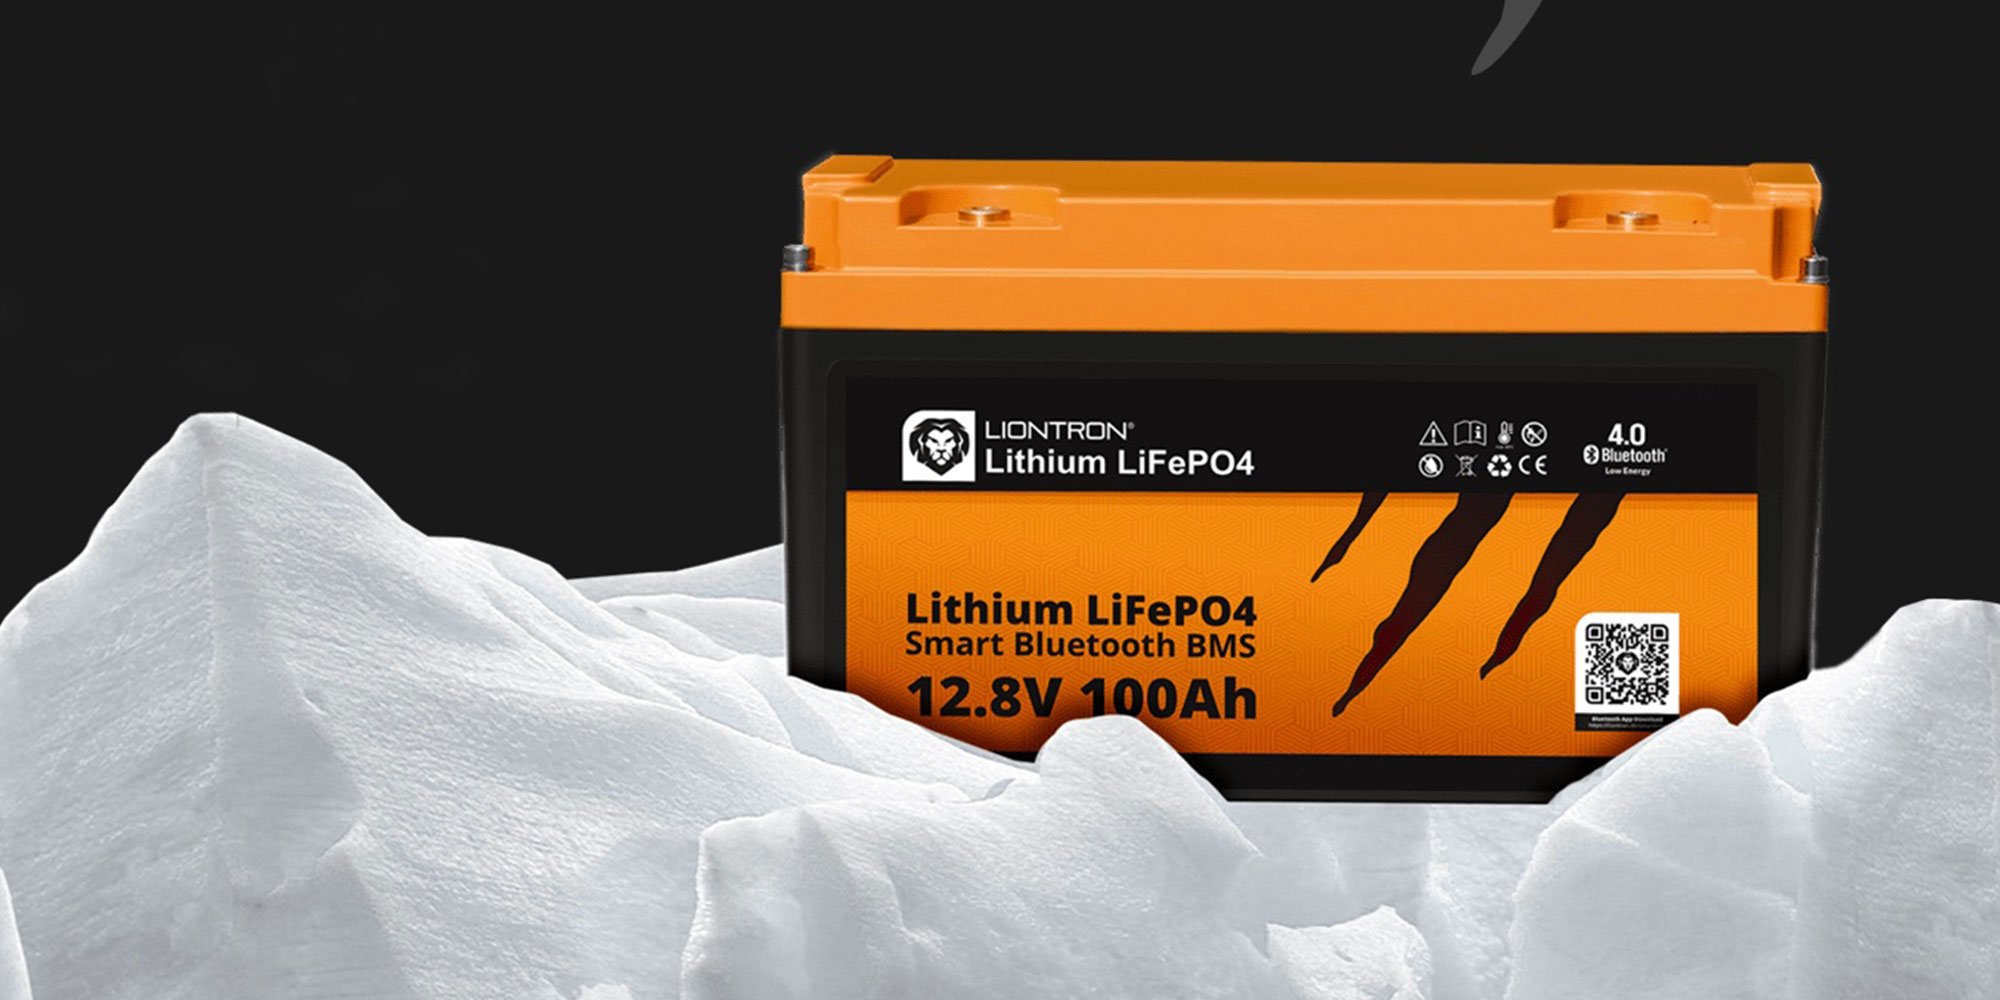 Liontron Lithium LiFePO4 LX 12.8V 100Ah ARCTIC